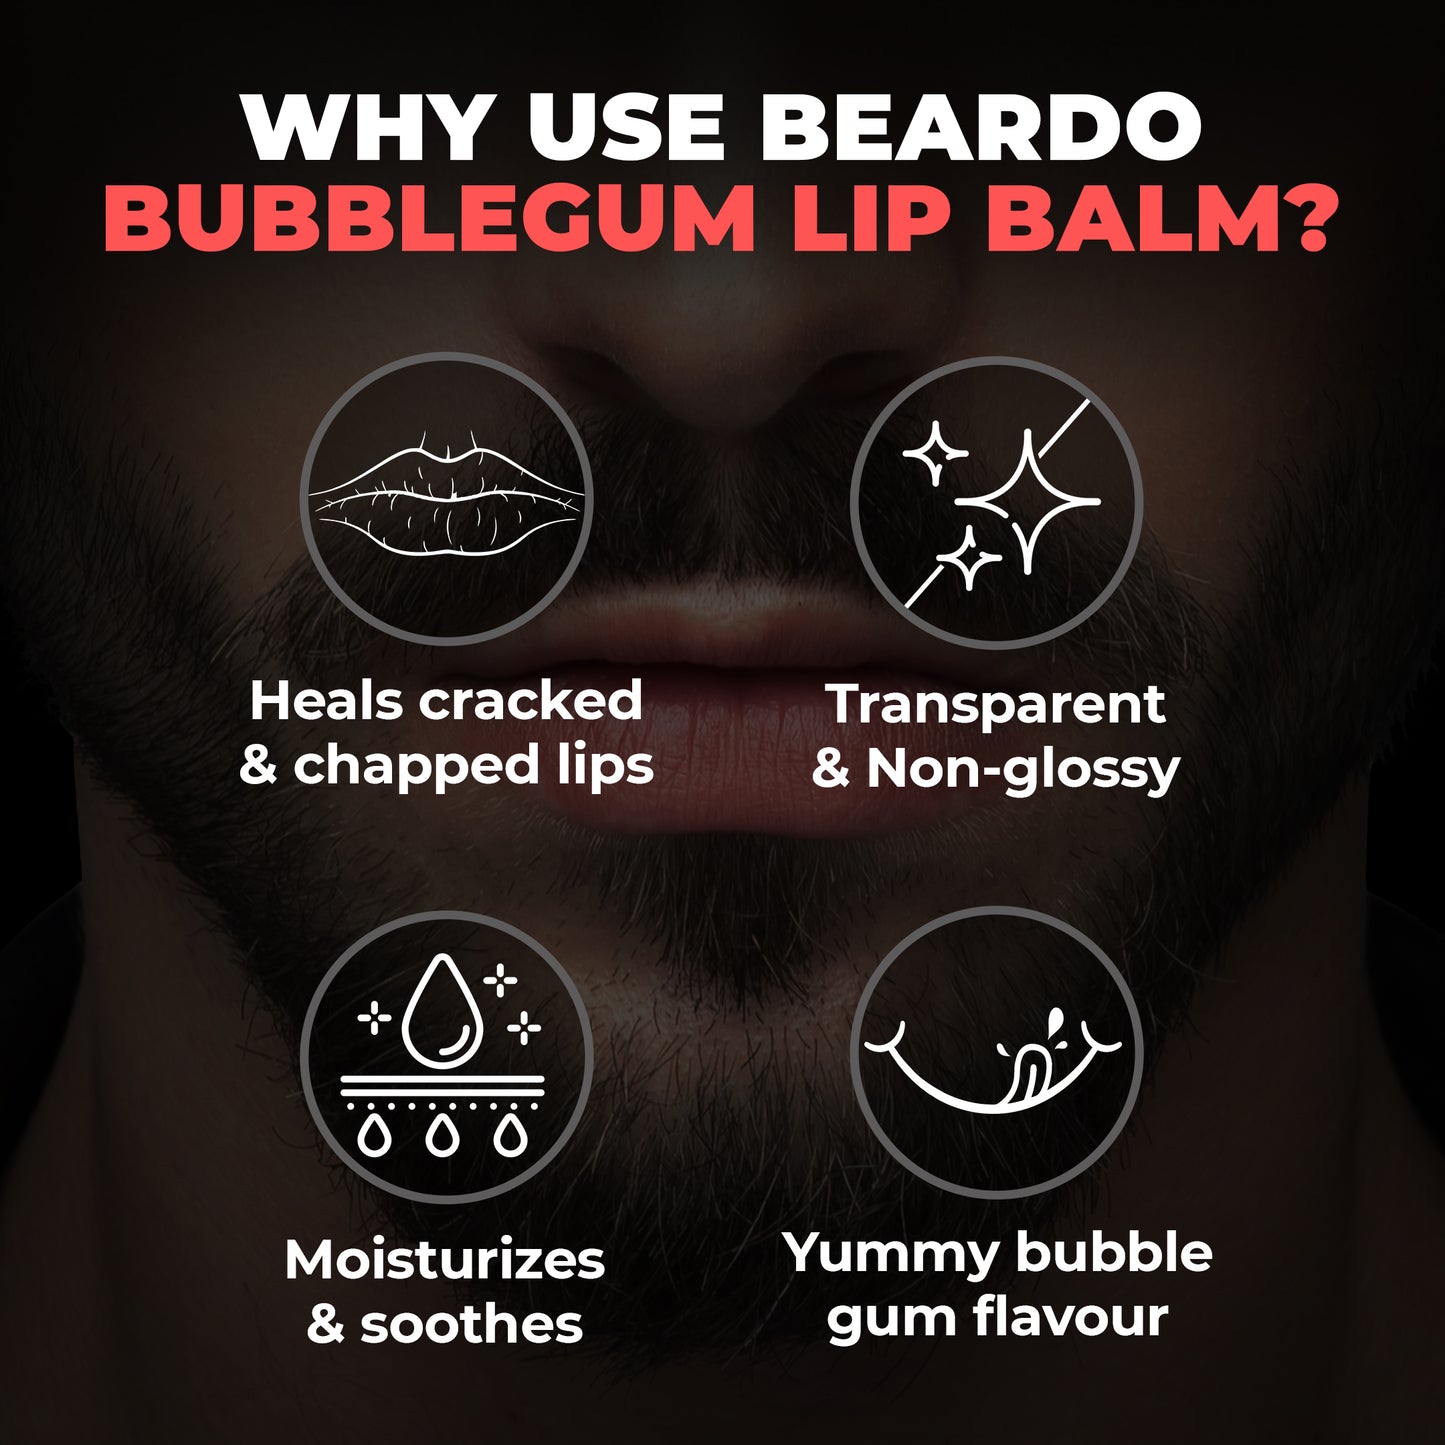 bubblegum lip balm, heal cracked lips, chapped lips, dry lips men, transparent lip balm, non glossy lip balm